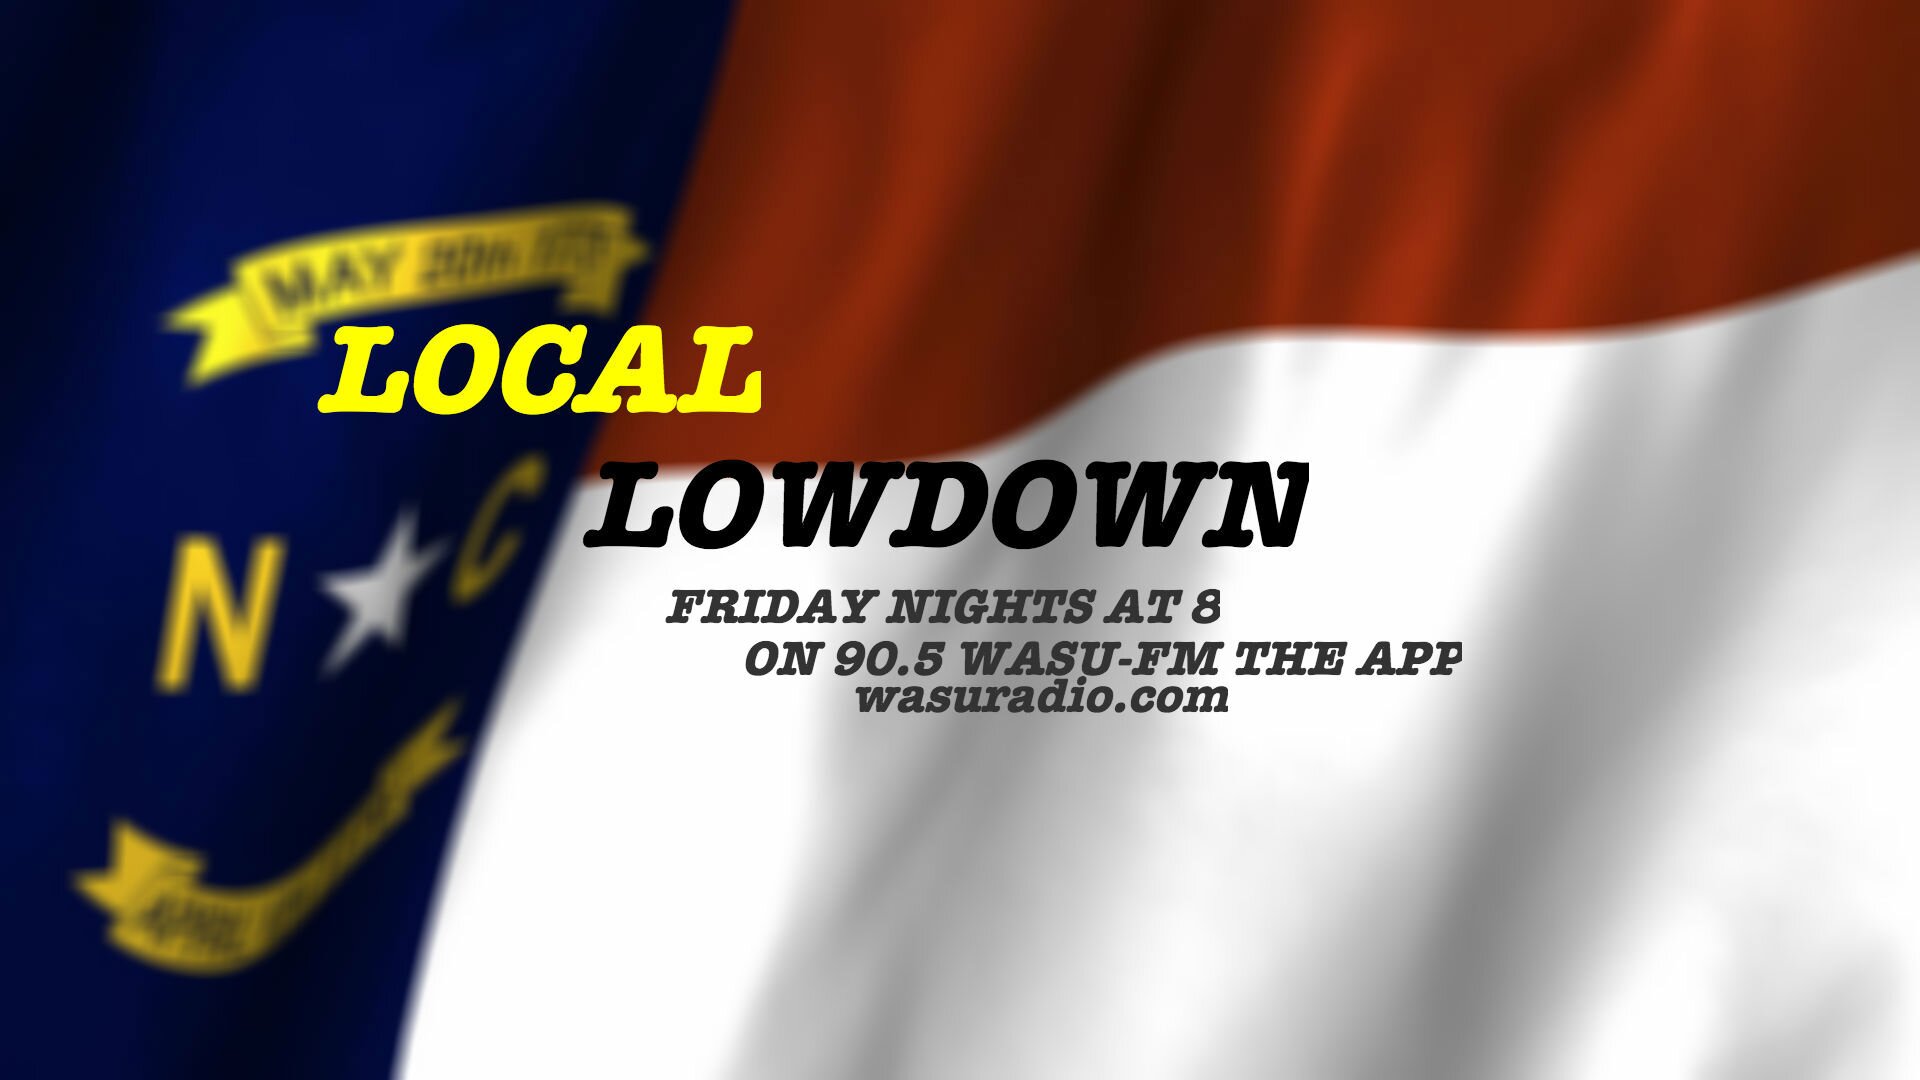 The Local Lowdown